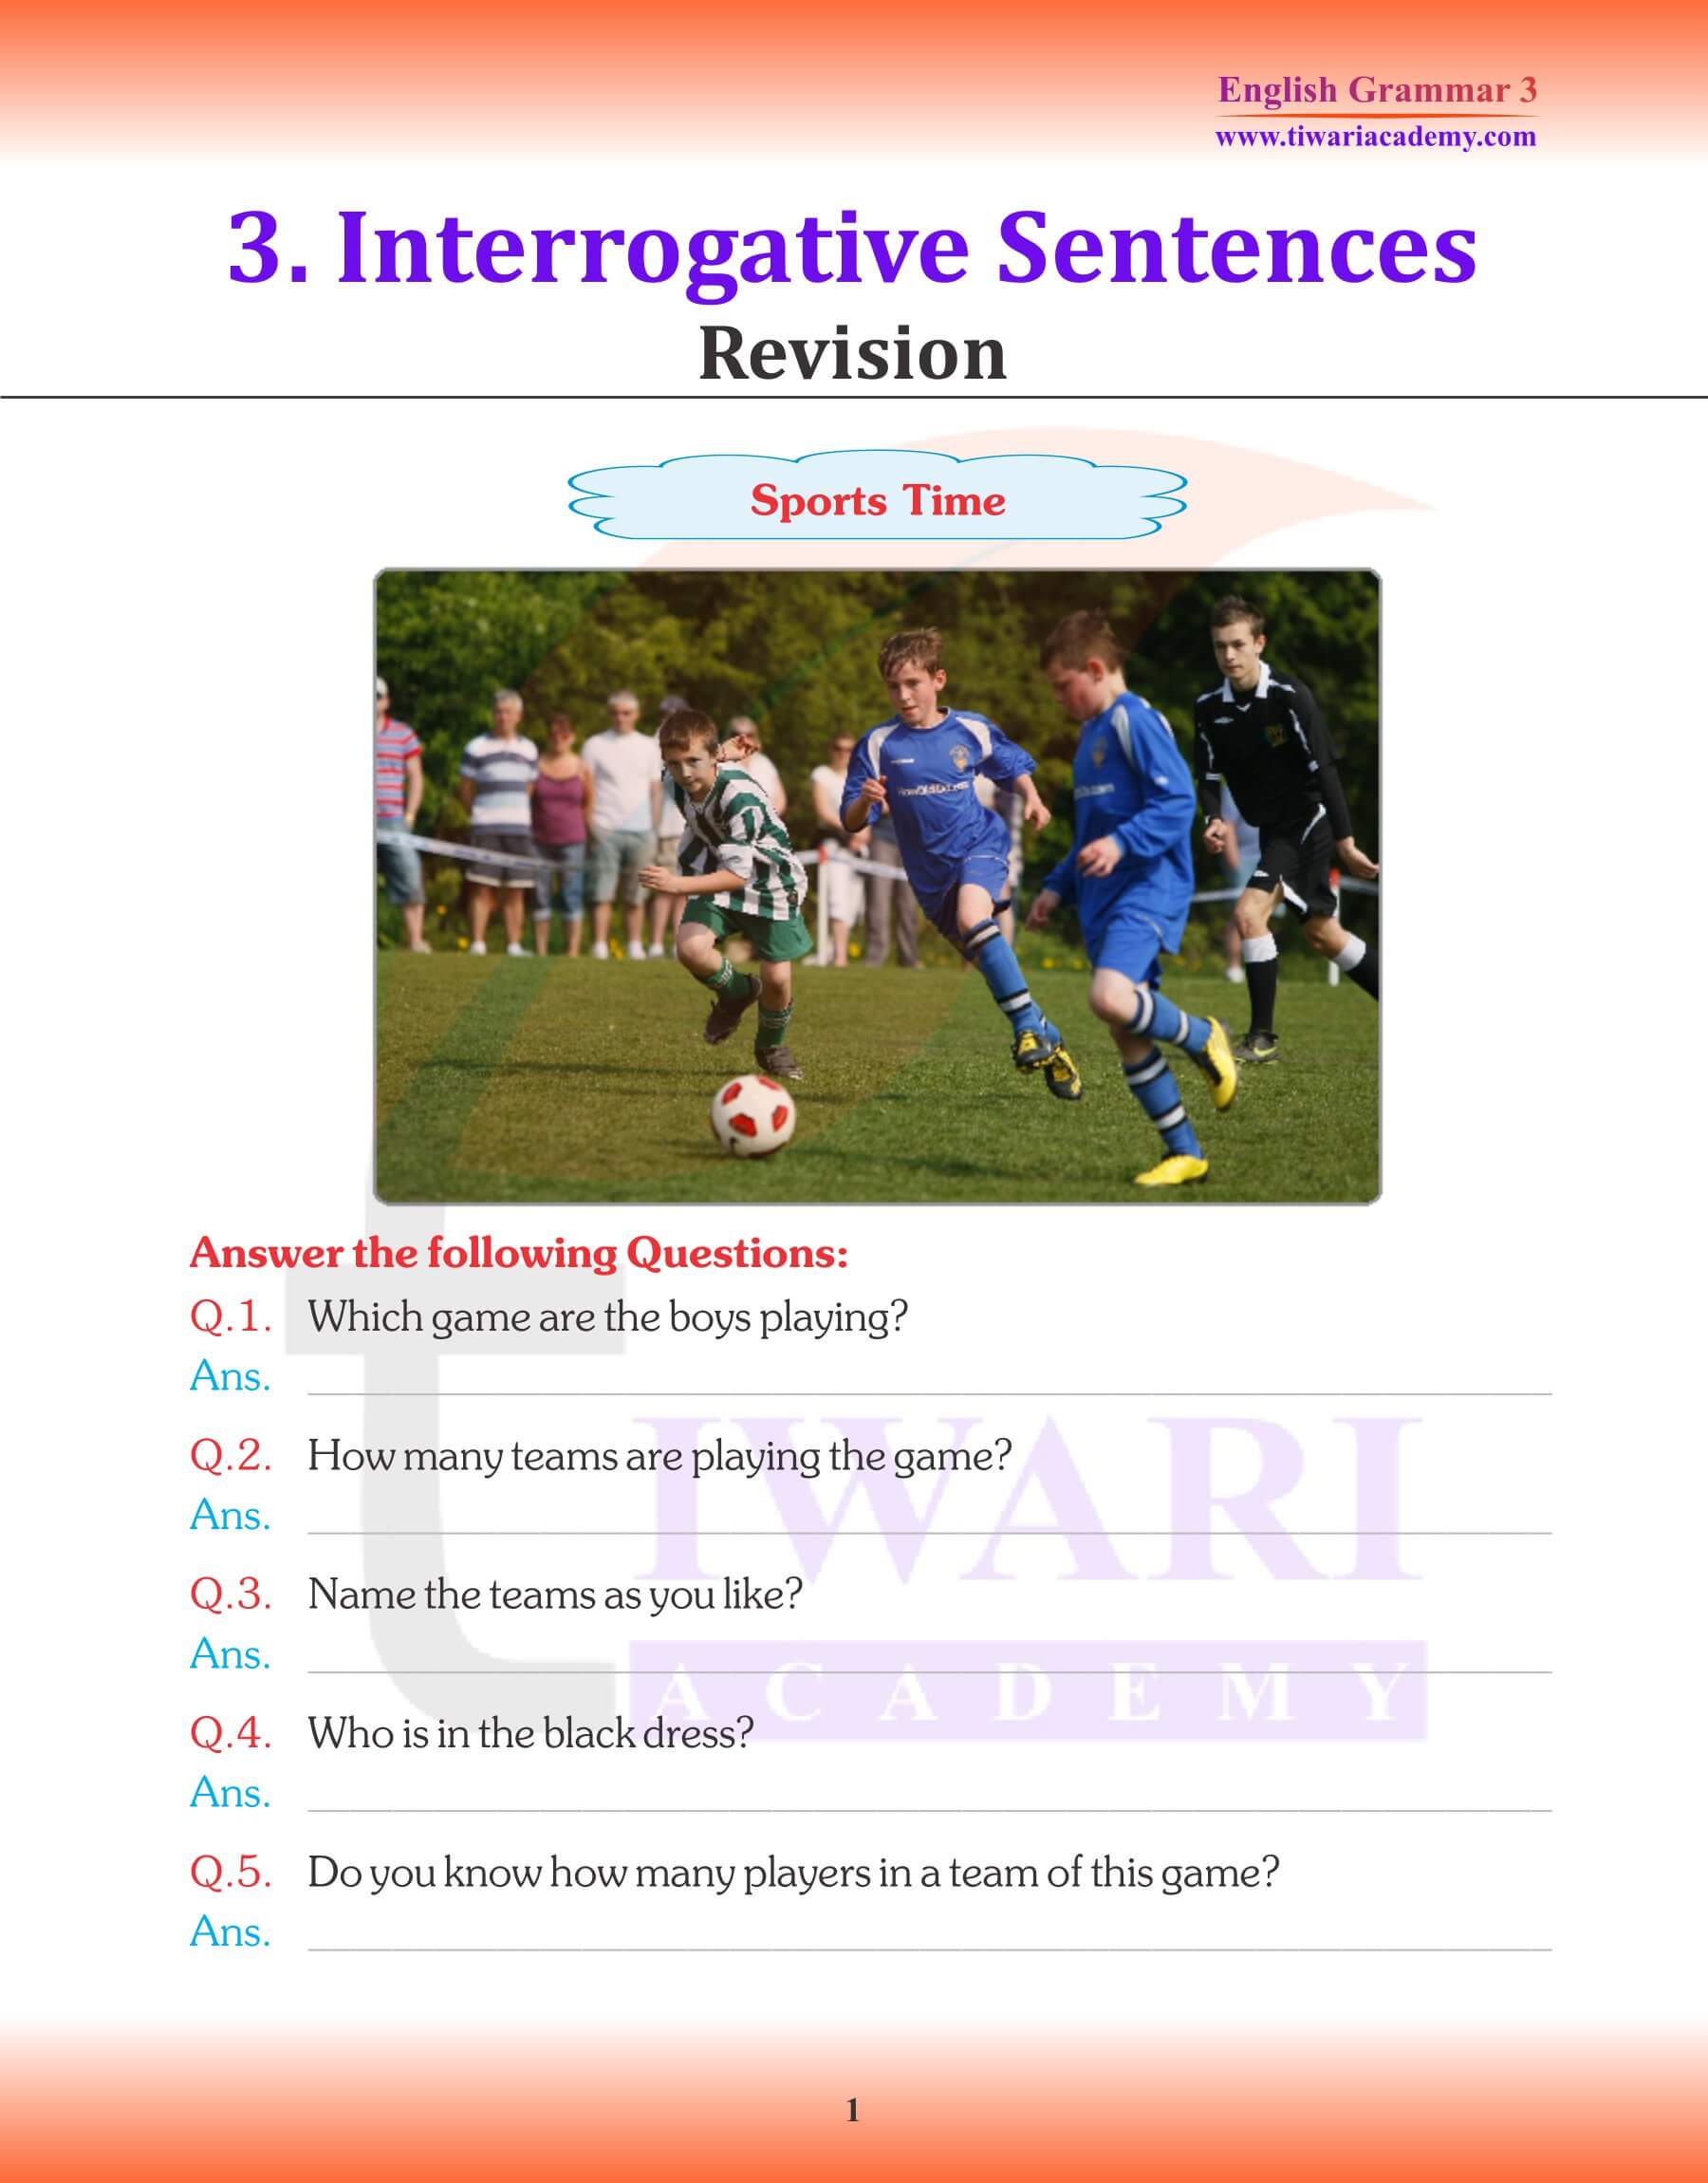 English Grammar for Grade 3 Chapter 3 Interrogative Sentences